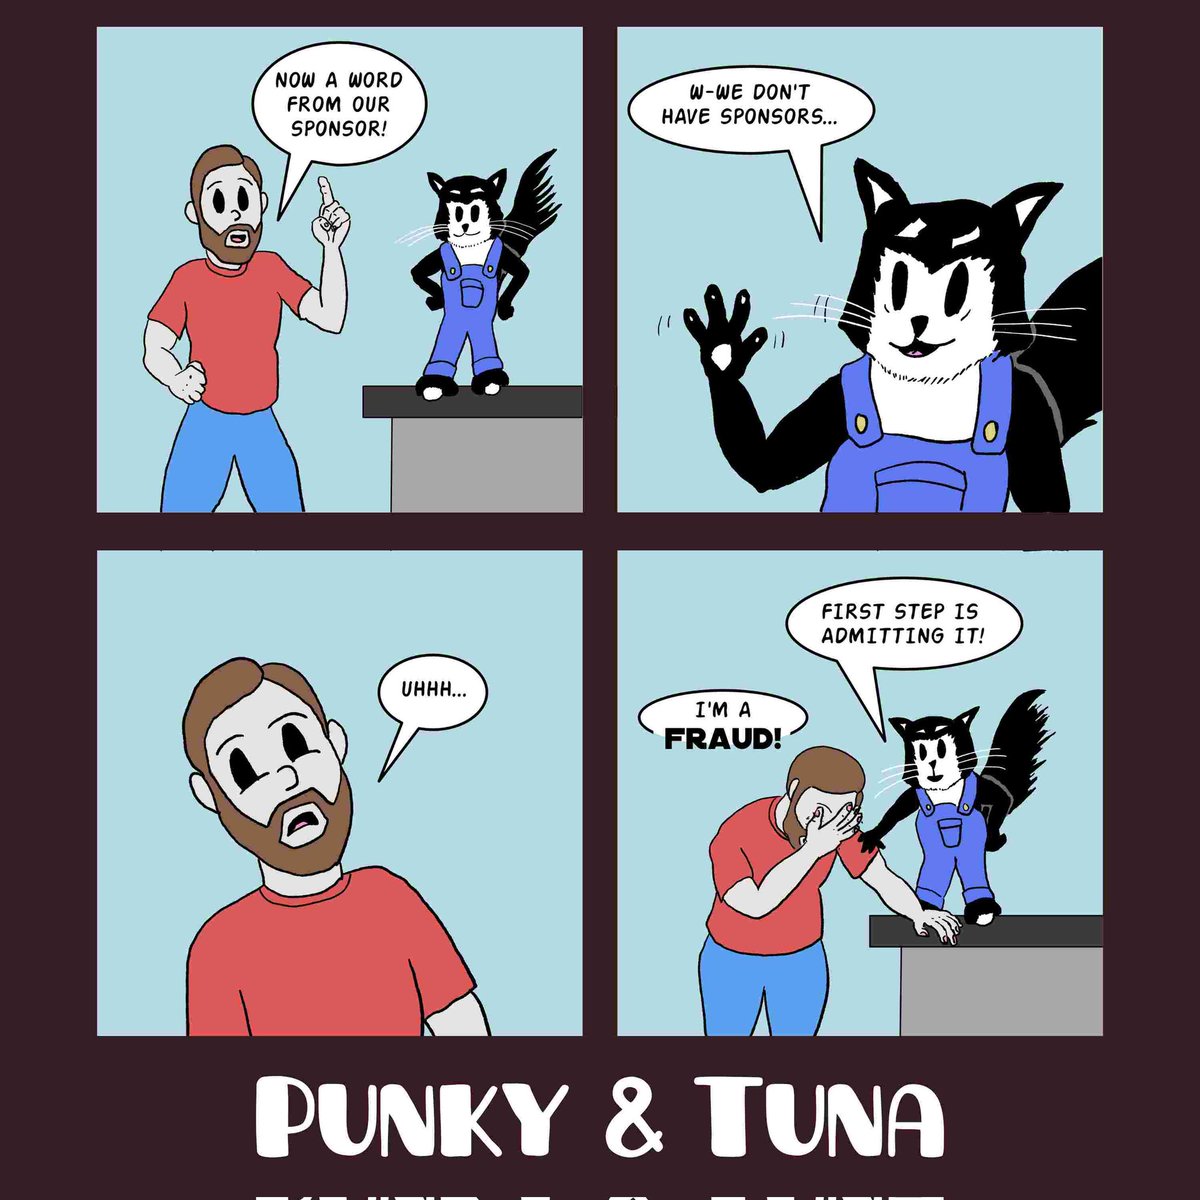 Any takers...please?
•
•
•
•
•
#webcomic #punkyandtuna #Punky #tuna #catcomic #kittycomic #cats #funny #sponsor #sponsors #createdonsurface #surfacepro #affinitydesigner #madeinaffinity #nabthenineties